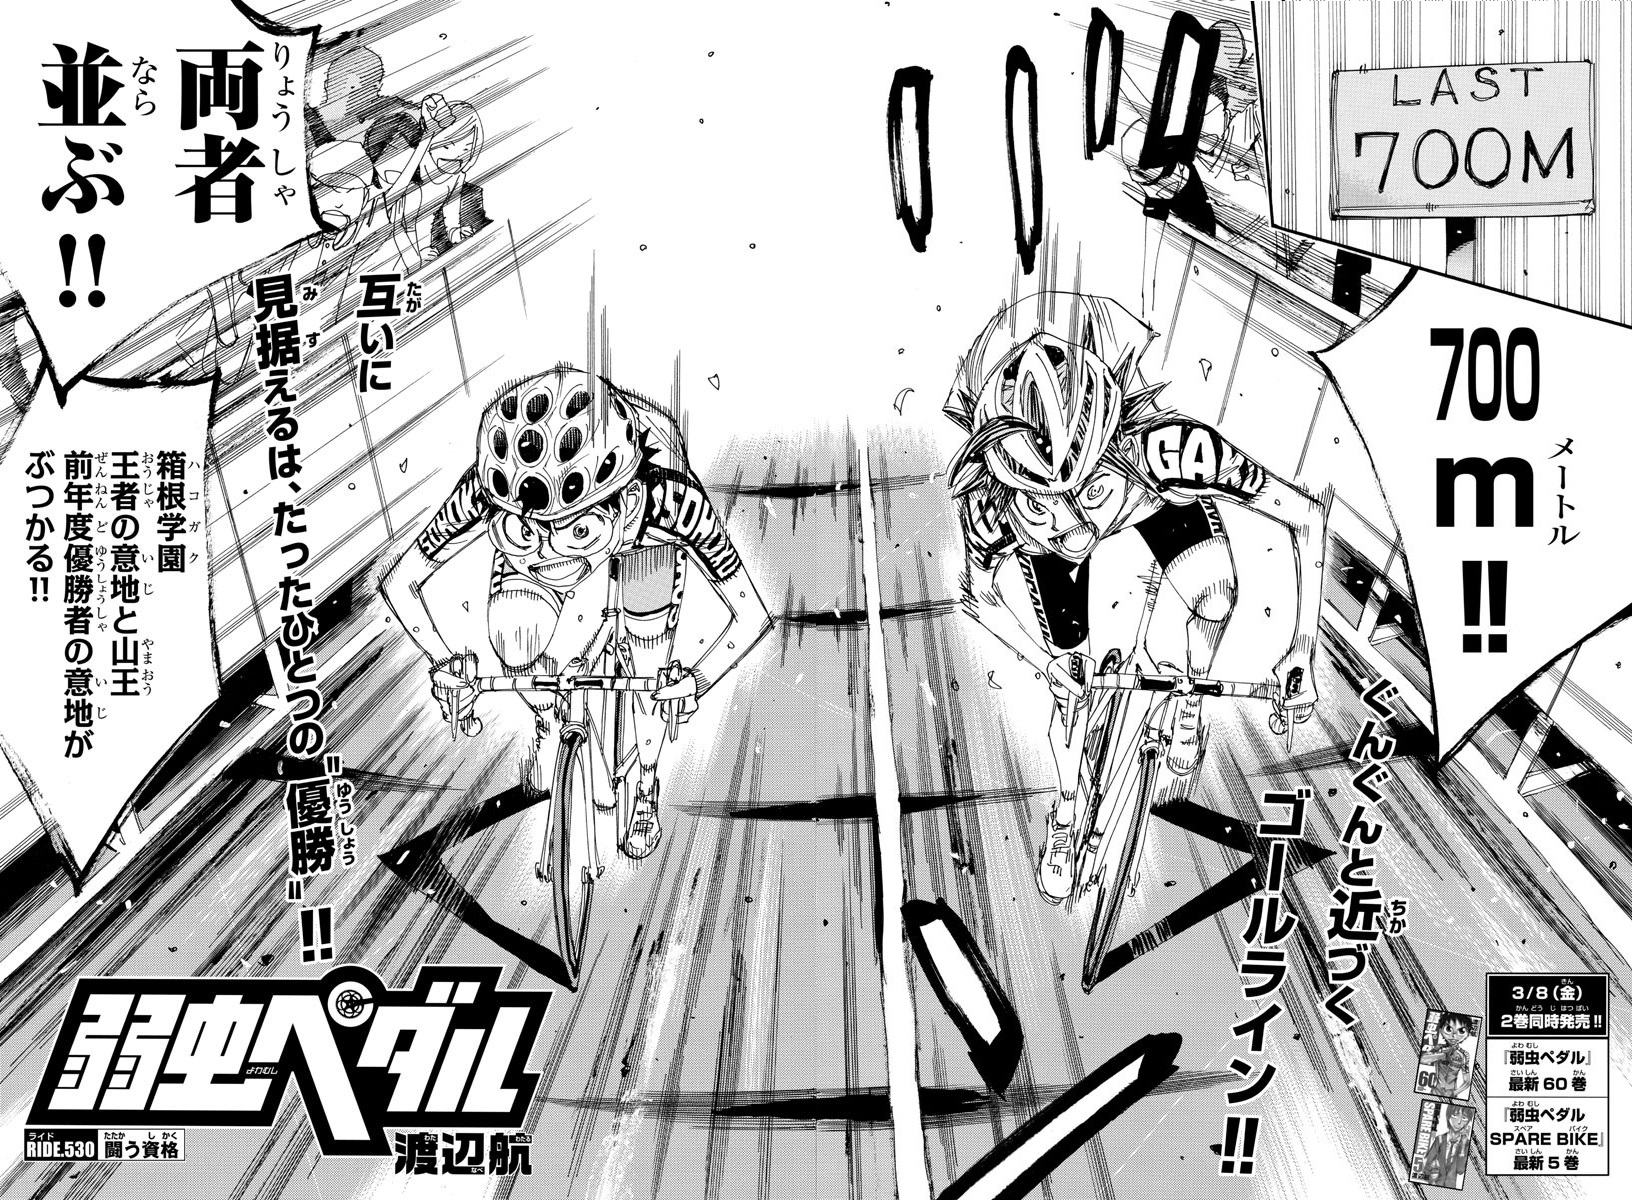 Chapter 530 Yowamushi Pedal Go Wiki Fandom